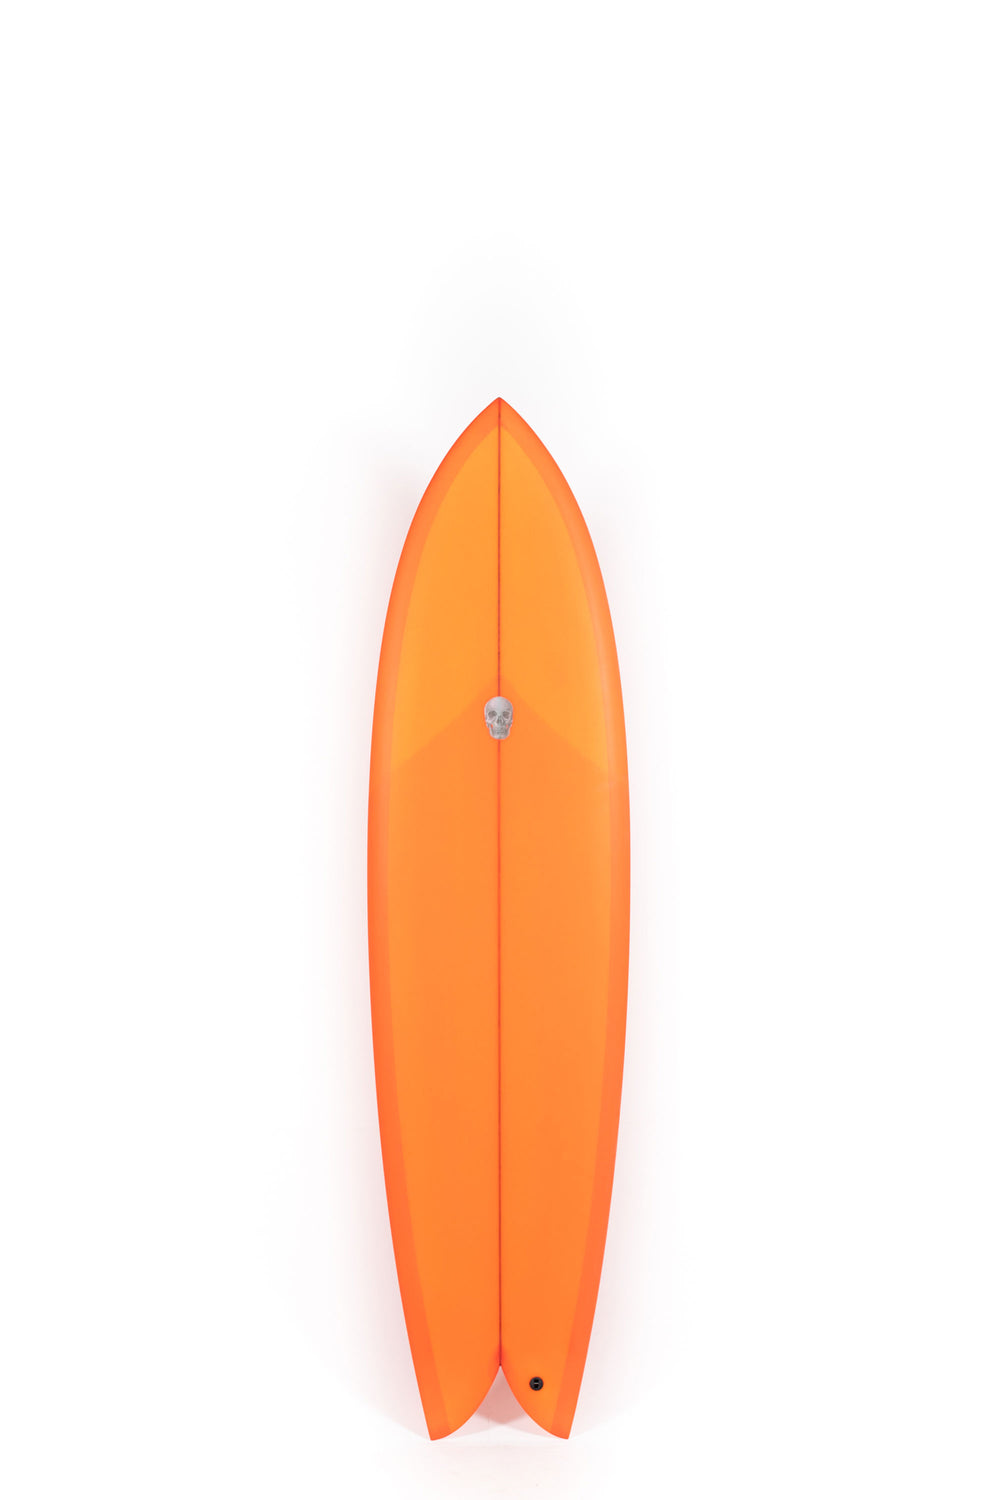 Pukas Surf Shop - Christenson Surfboards - LONG PHISH - 6'10